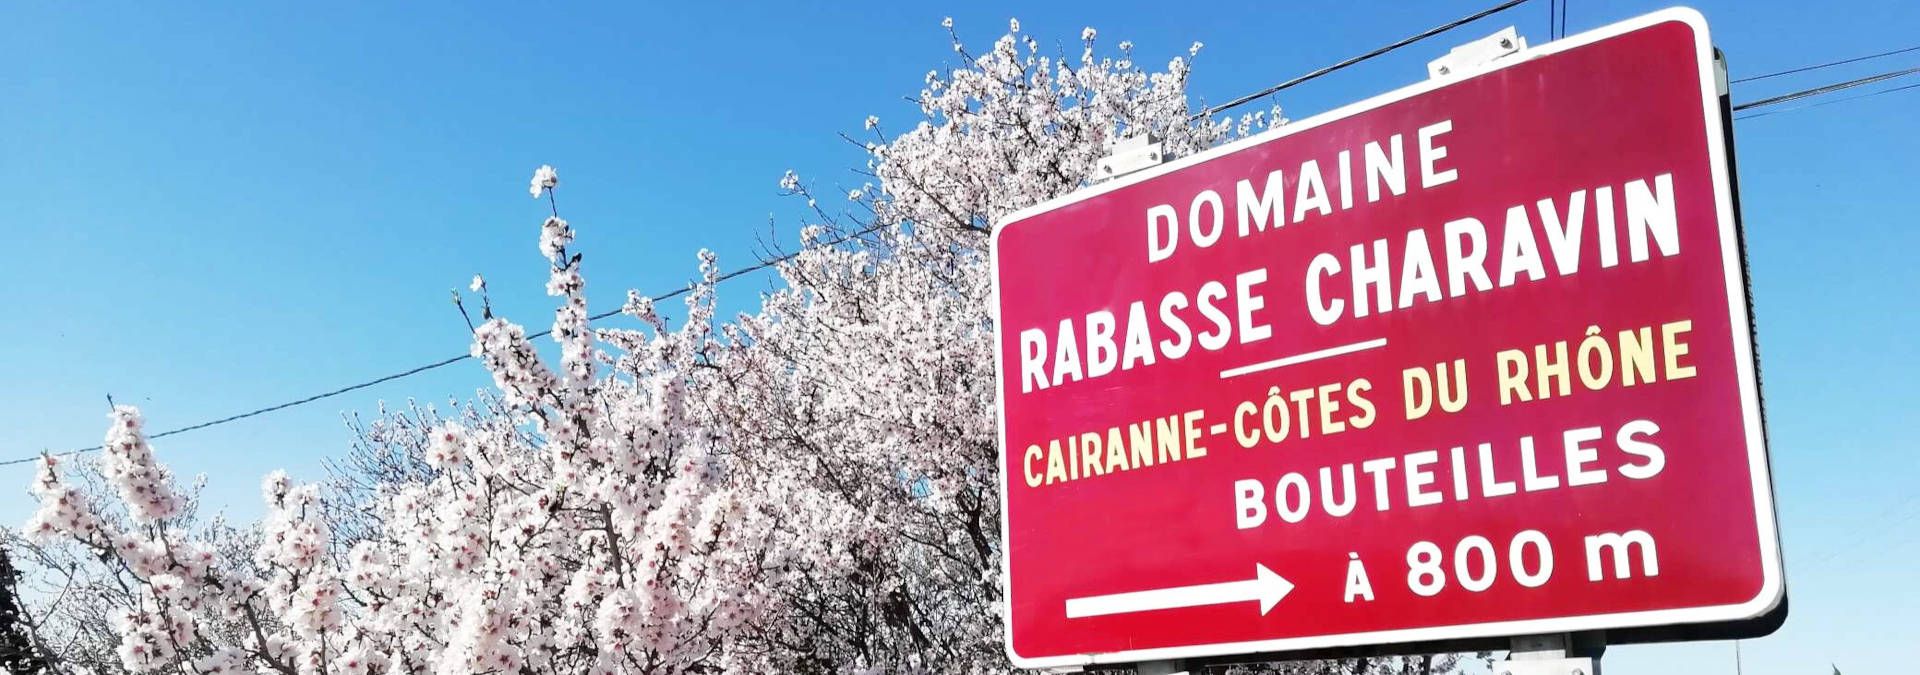 Domaine Rabasse Charavin - Rue des Vignerons